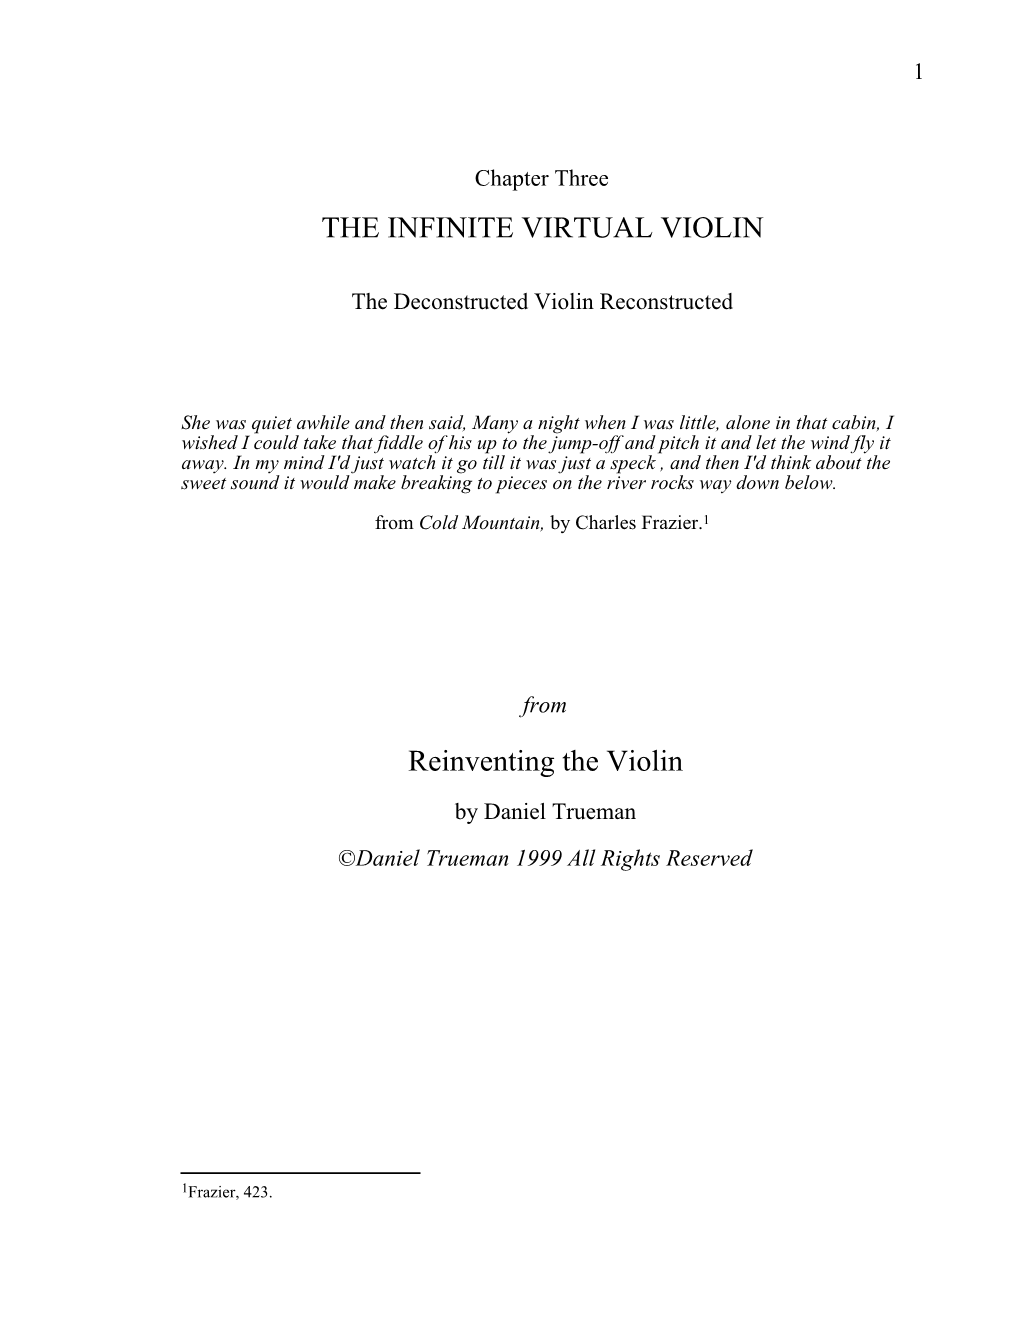 The Infinite Virtual Violin